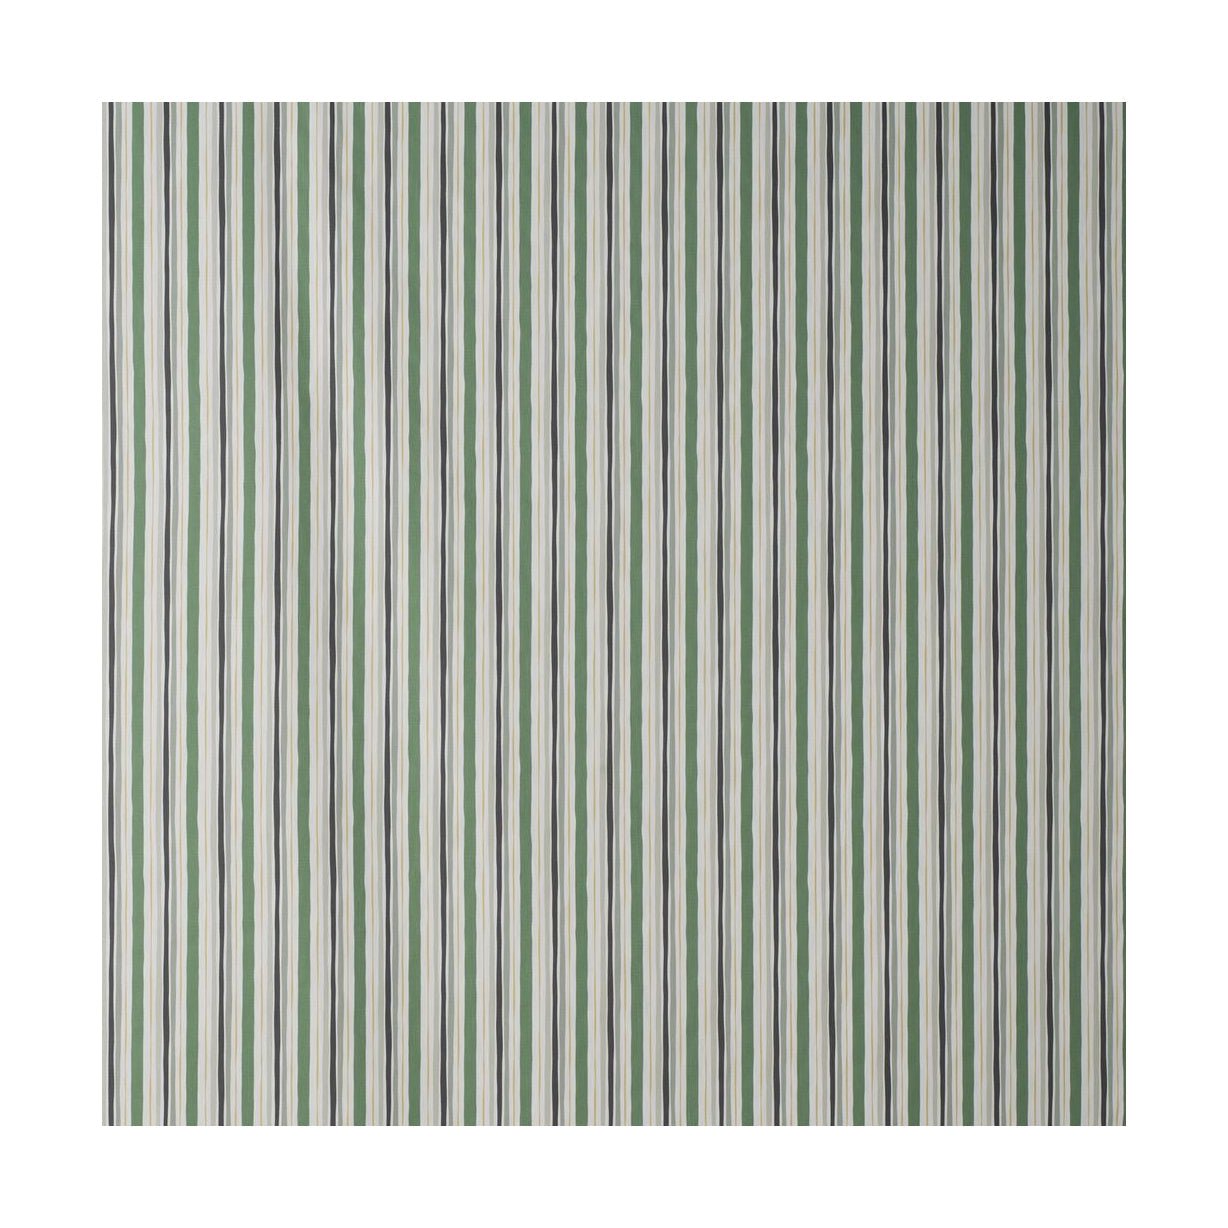 Spira Randi Fabric Width 150 Cm (Price Per Meter), Green